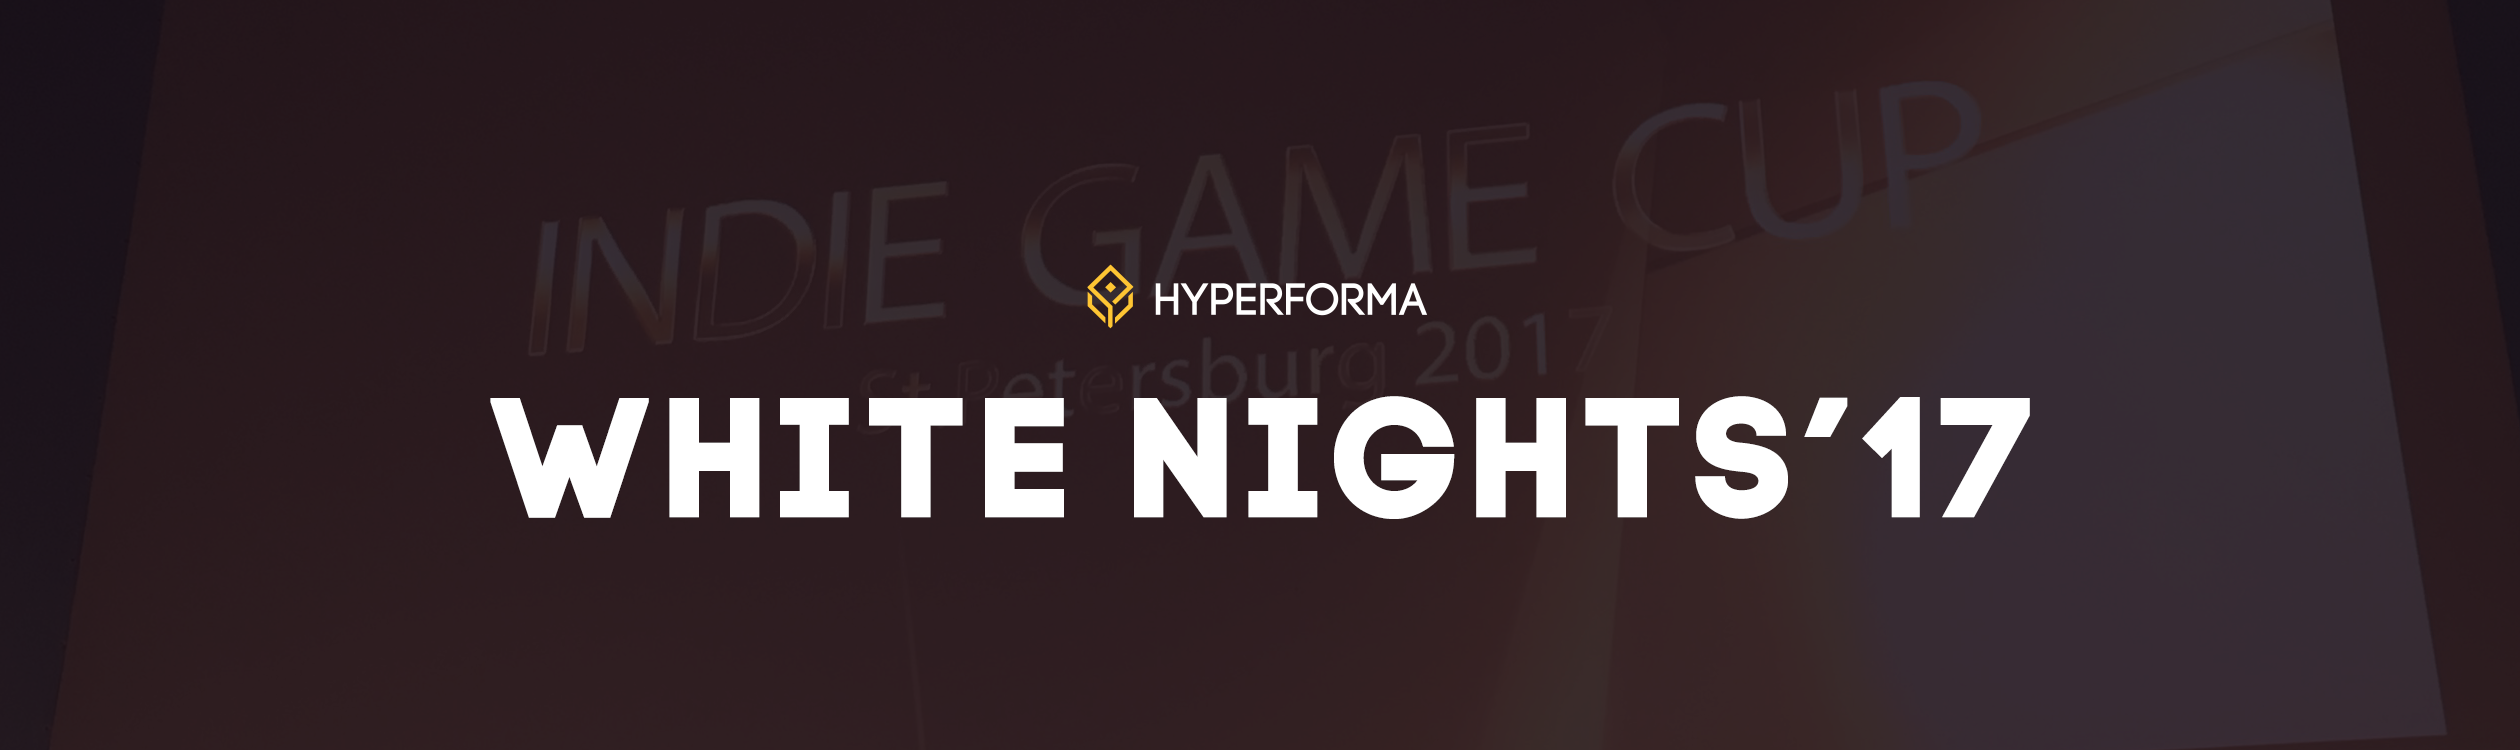 white nights 2017 hyperforma